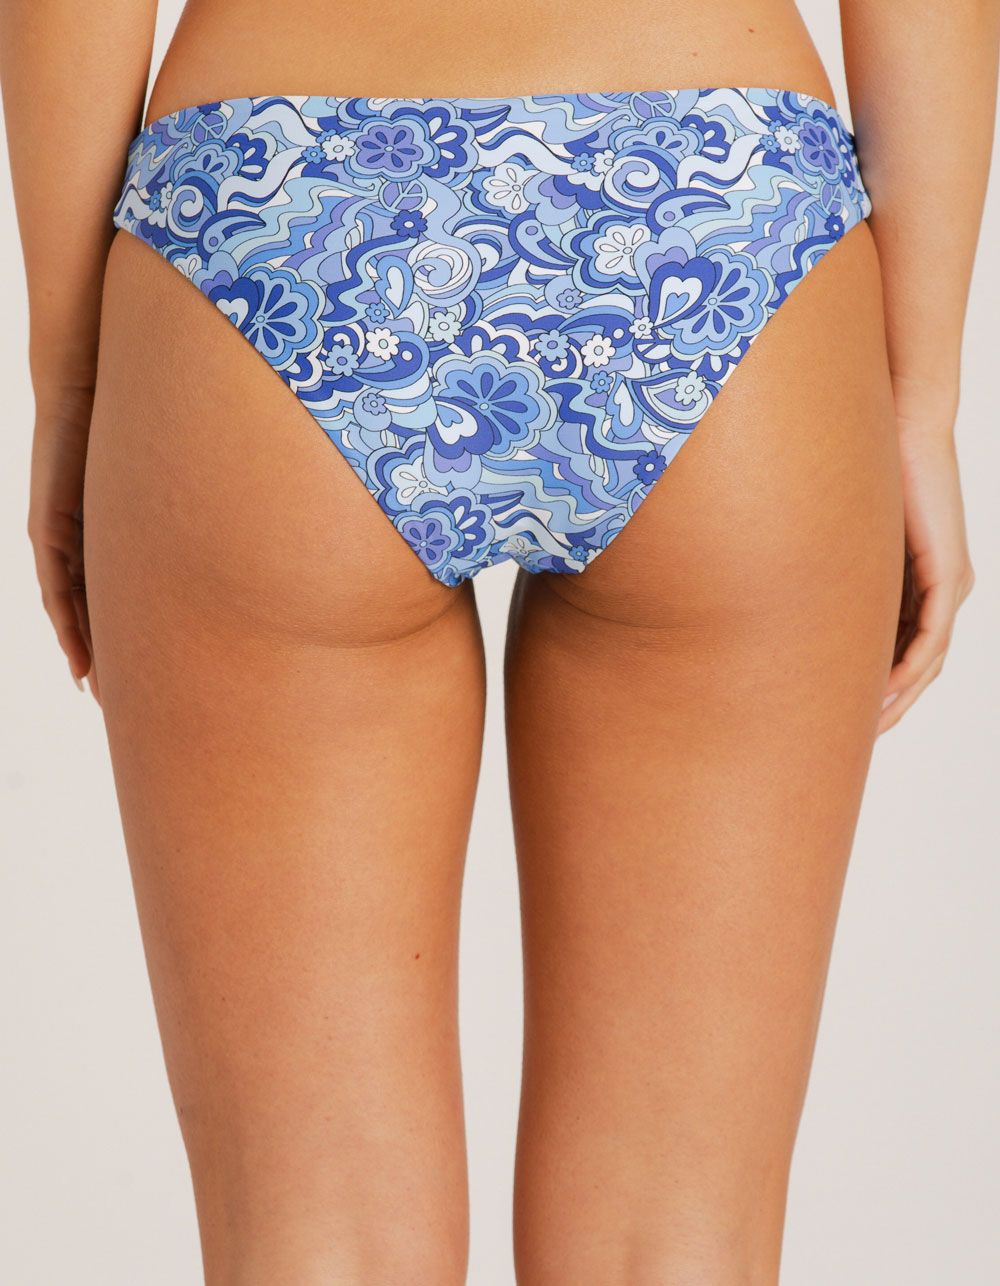 FULL TILT Swirl Multi-Way Bikini Top - BLUE COMBO